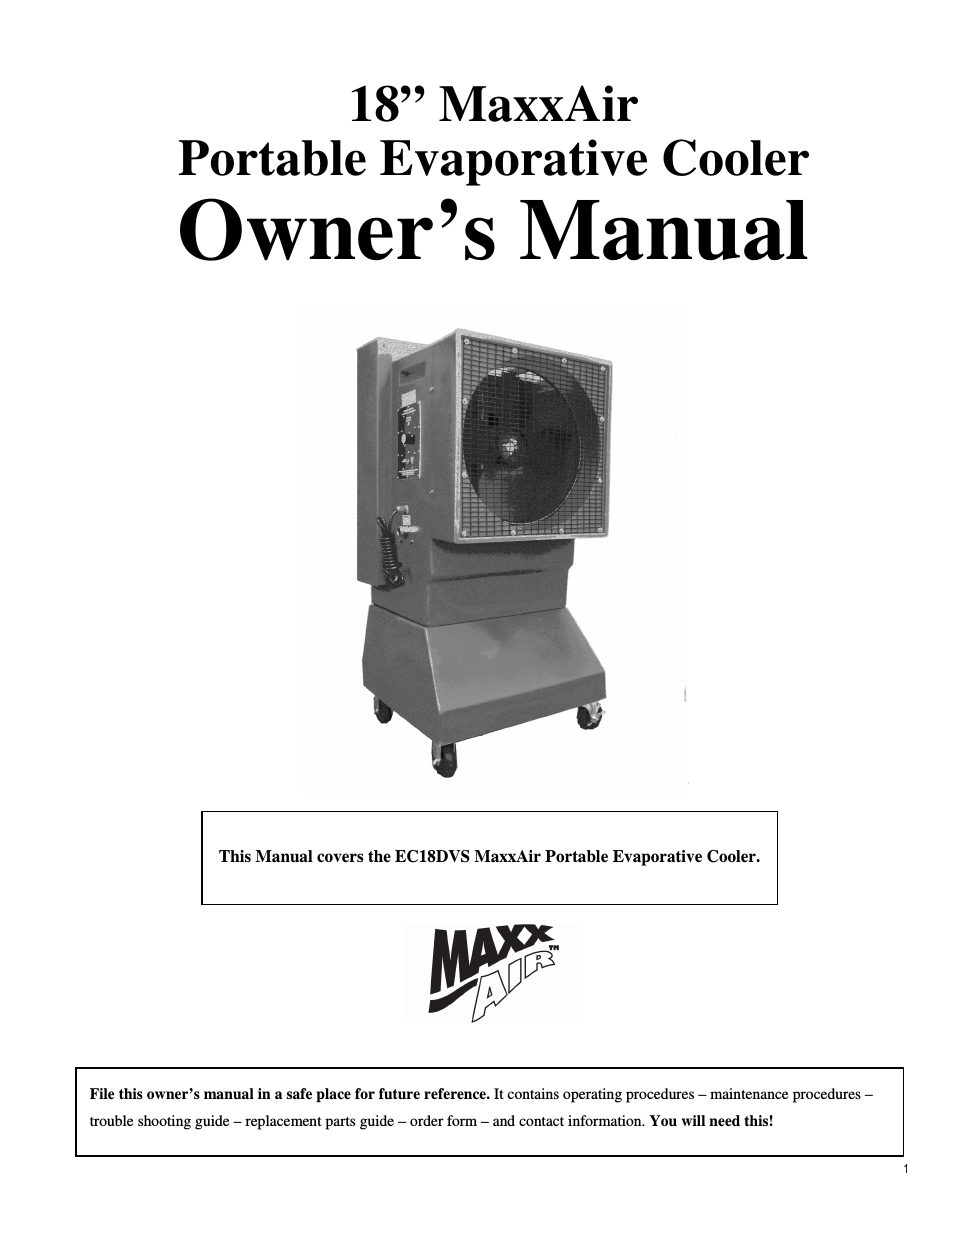 18” MaxxAir Portable Evaporative Cooler Owner’s Manual